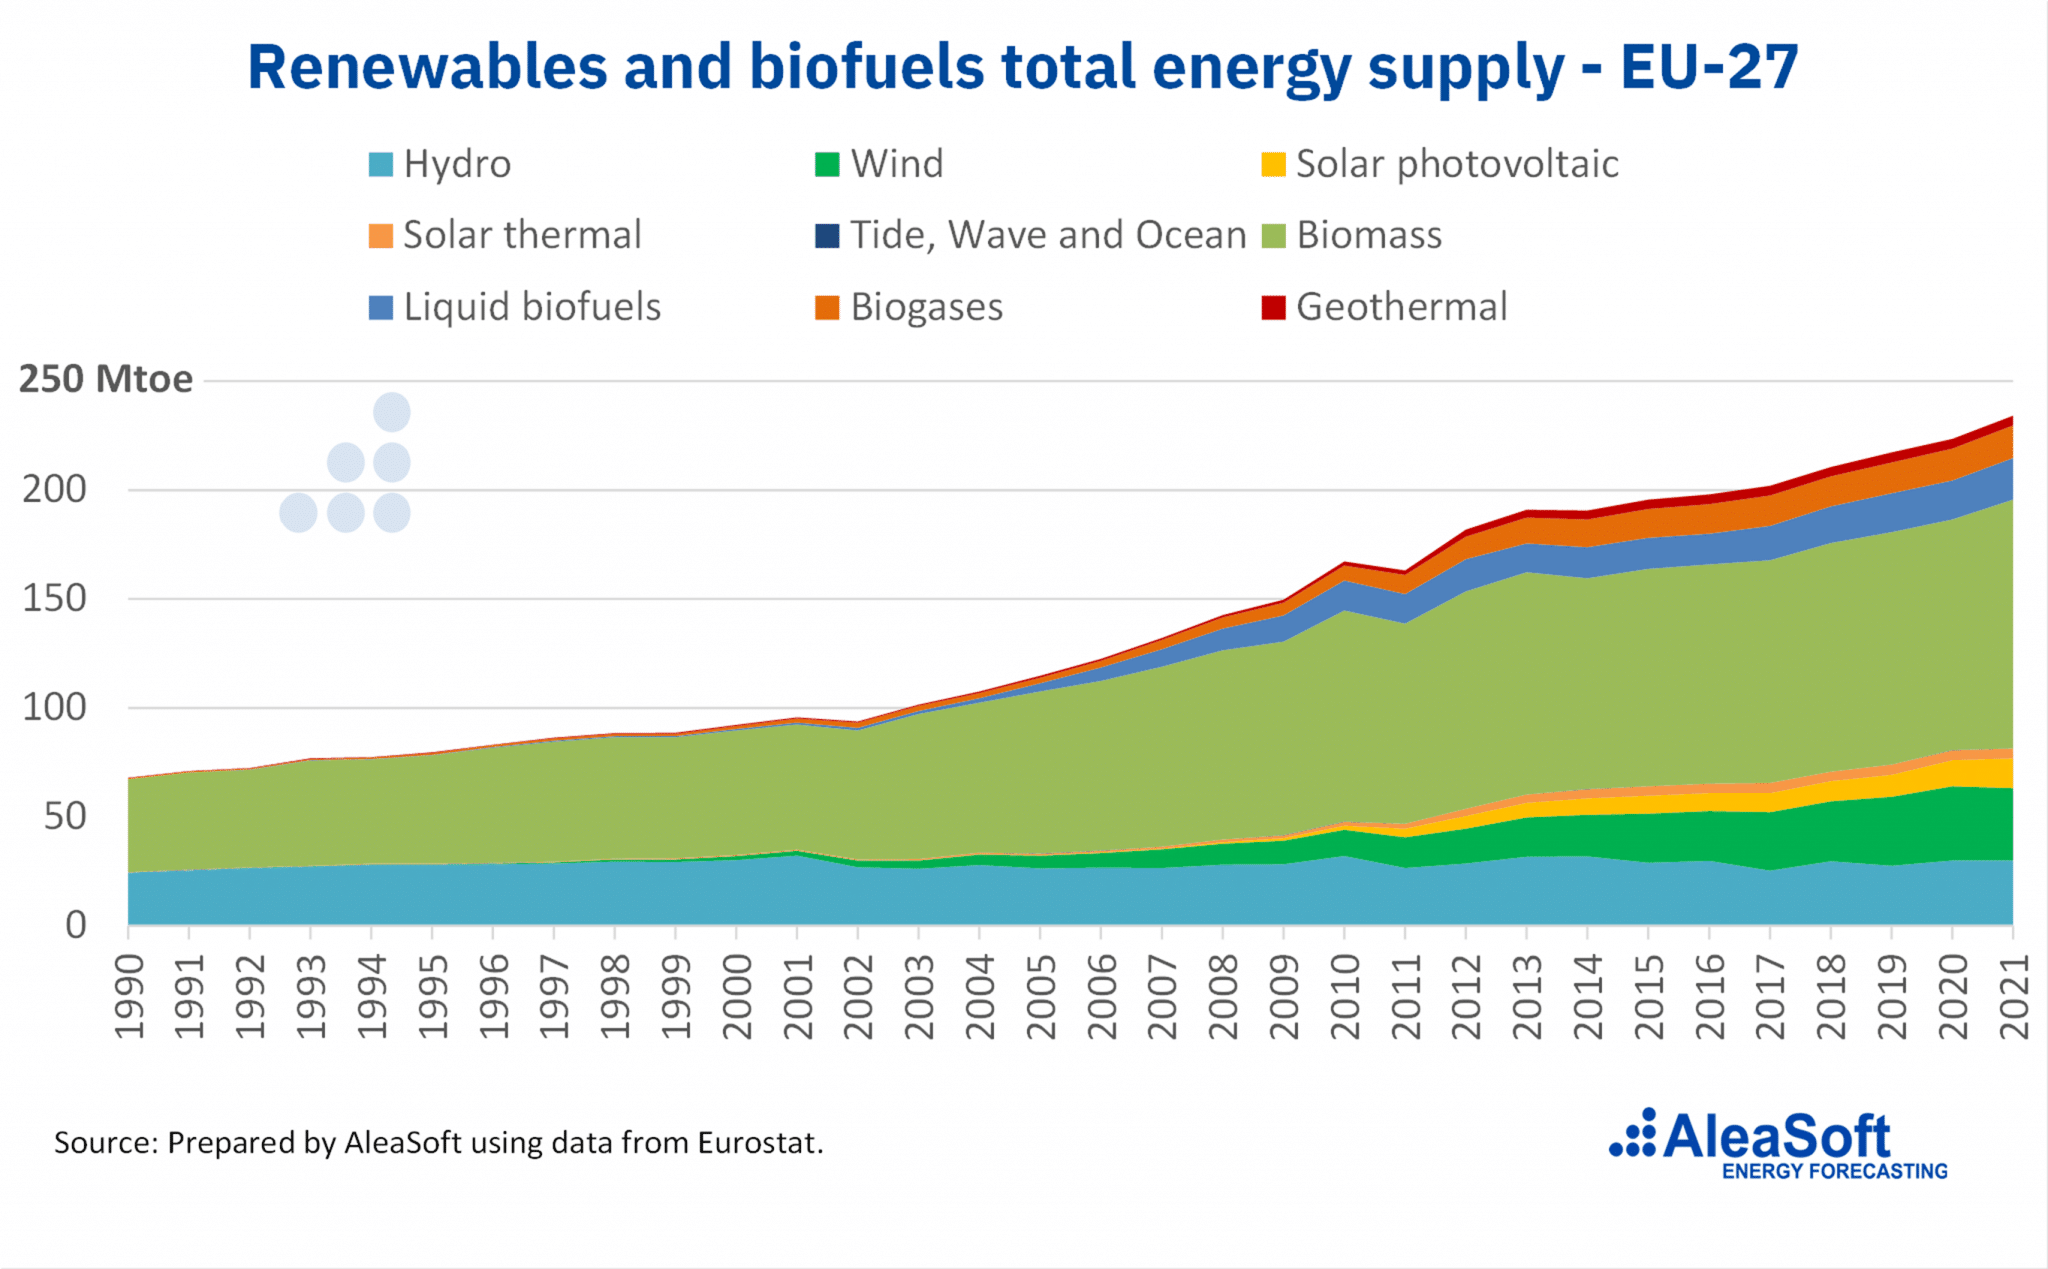 AleaSoft - Renewables biofuels total energy supply EU 27